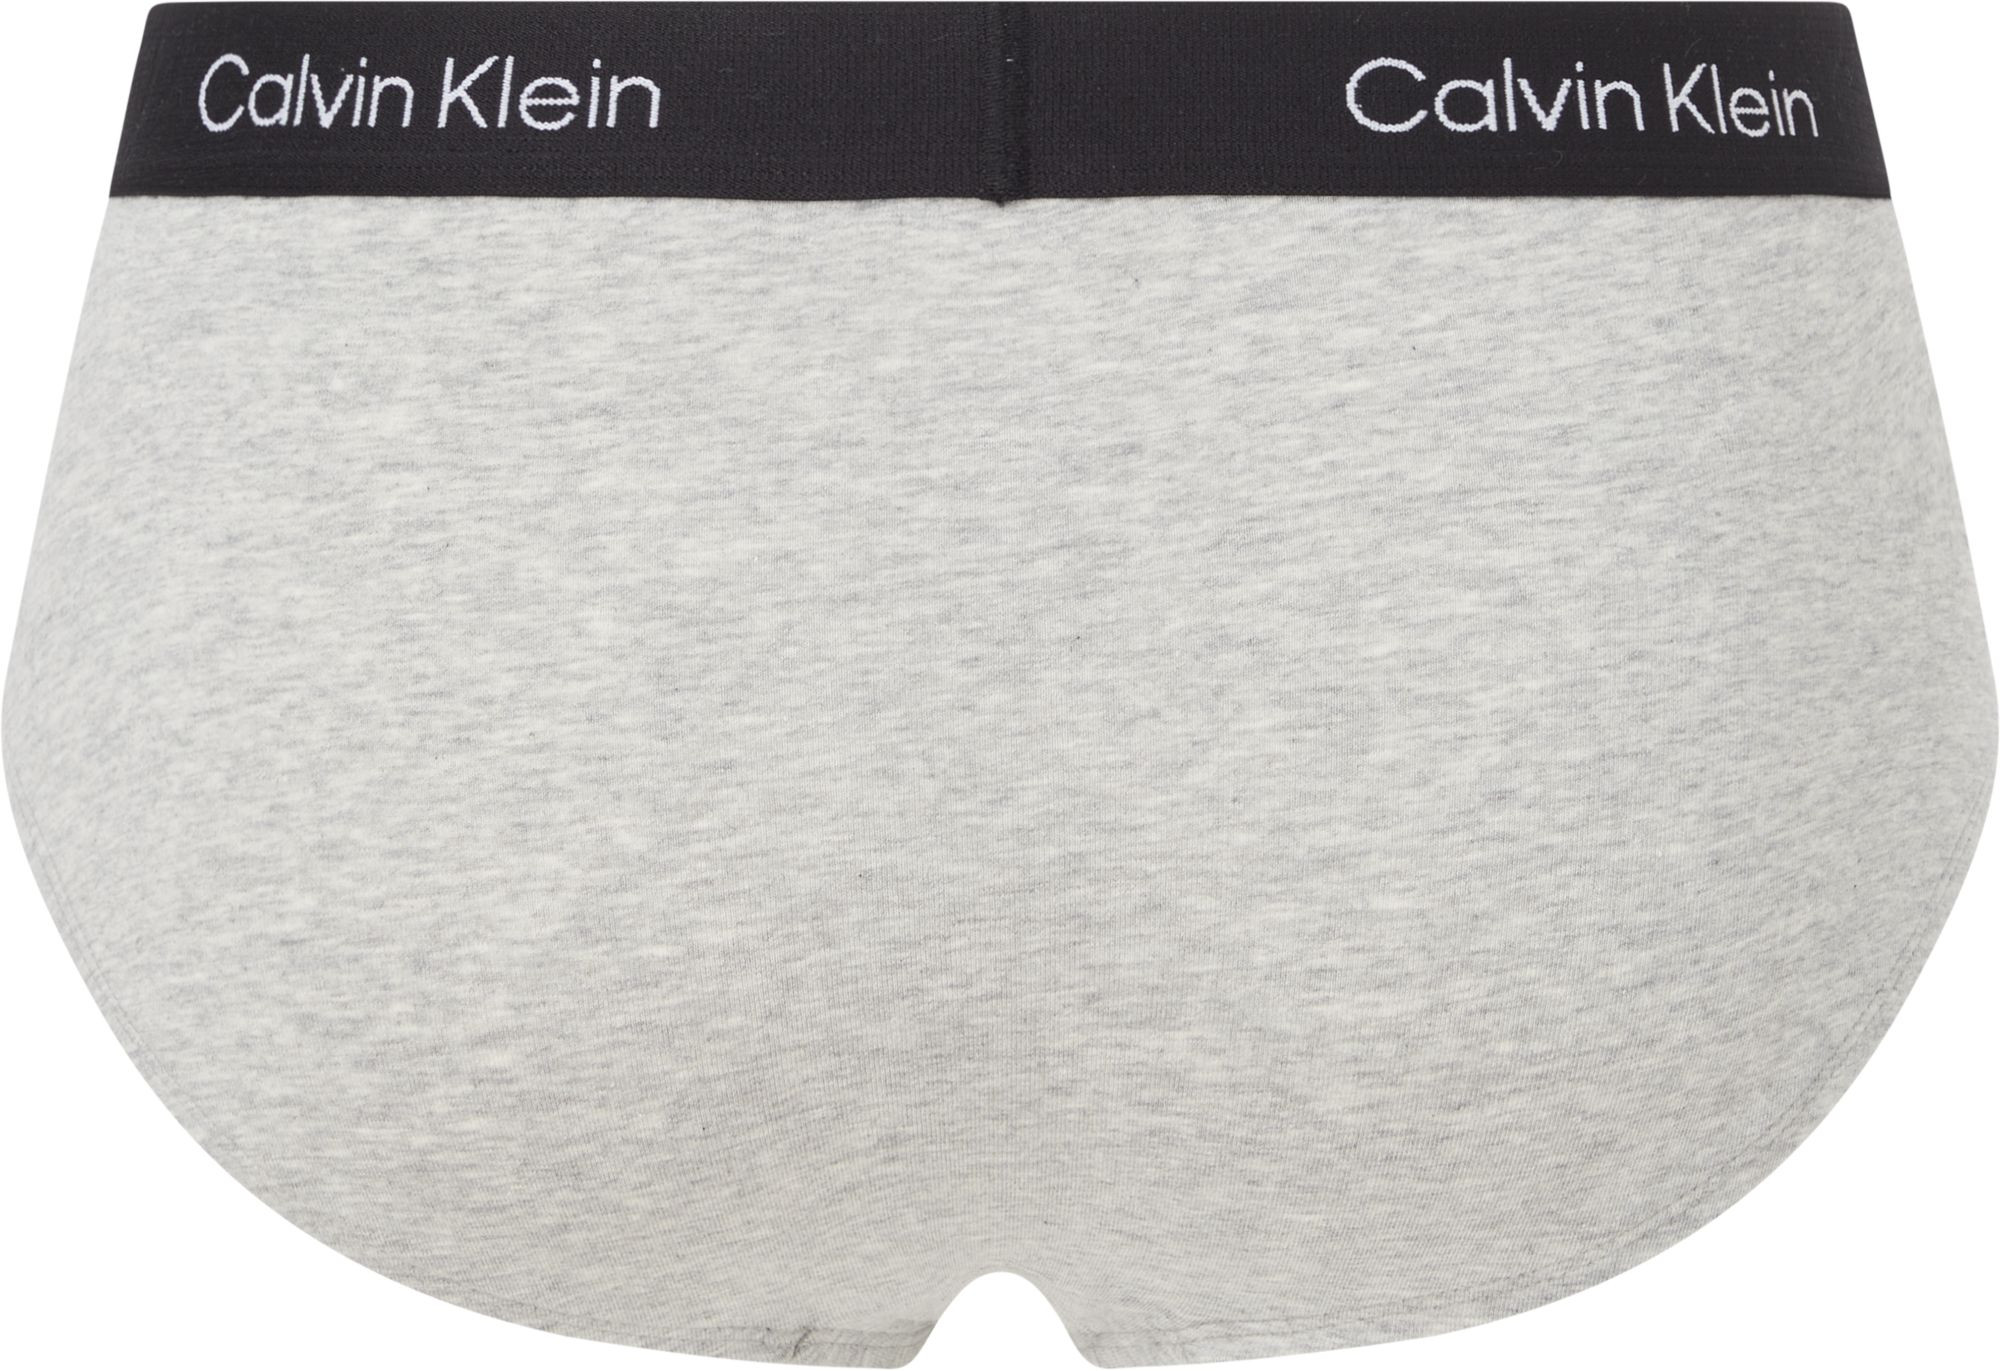 Pánské slipy 3 Pack Briefs CK96 000NB3527A6H3 černá/bílá/šedá - Calvin Klein XL